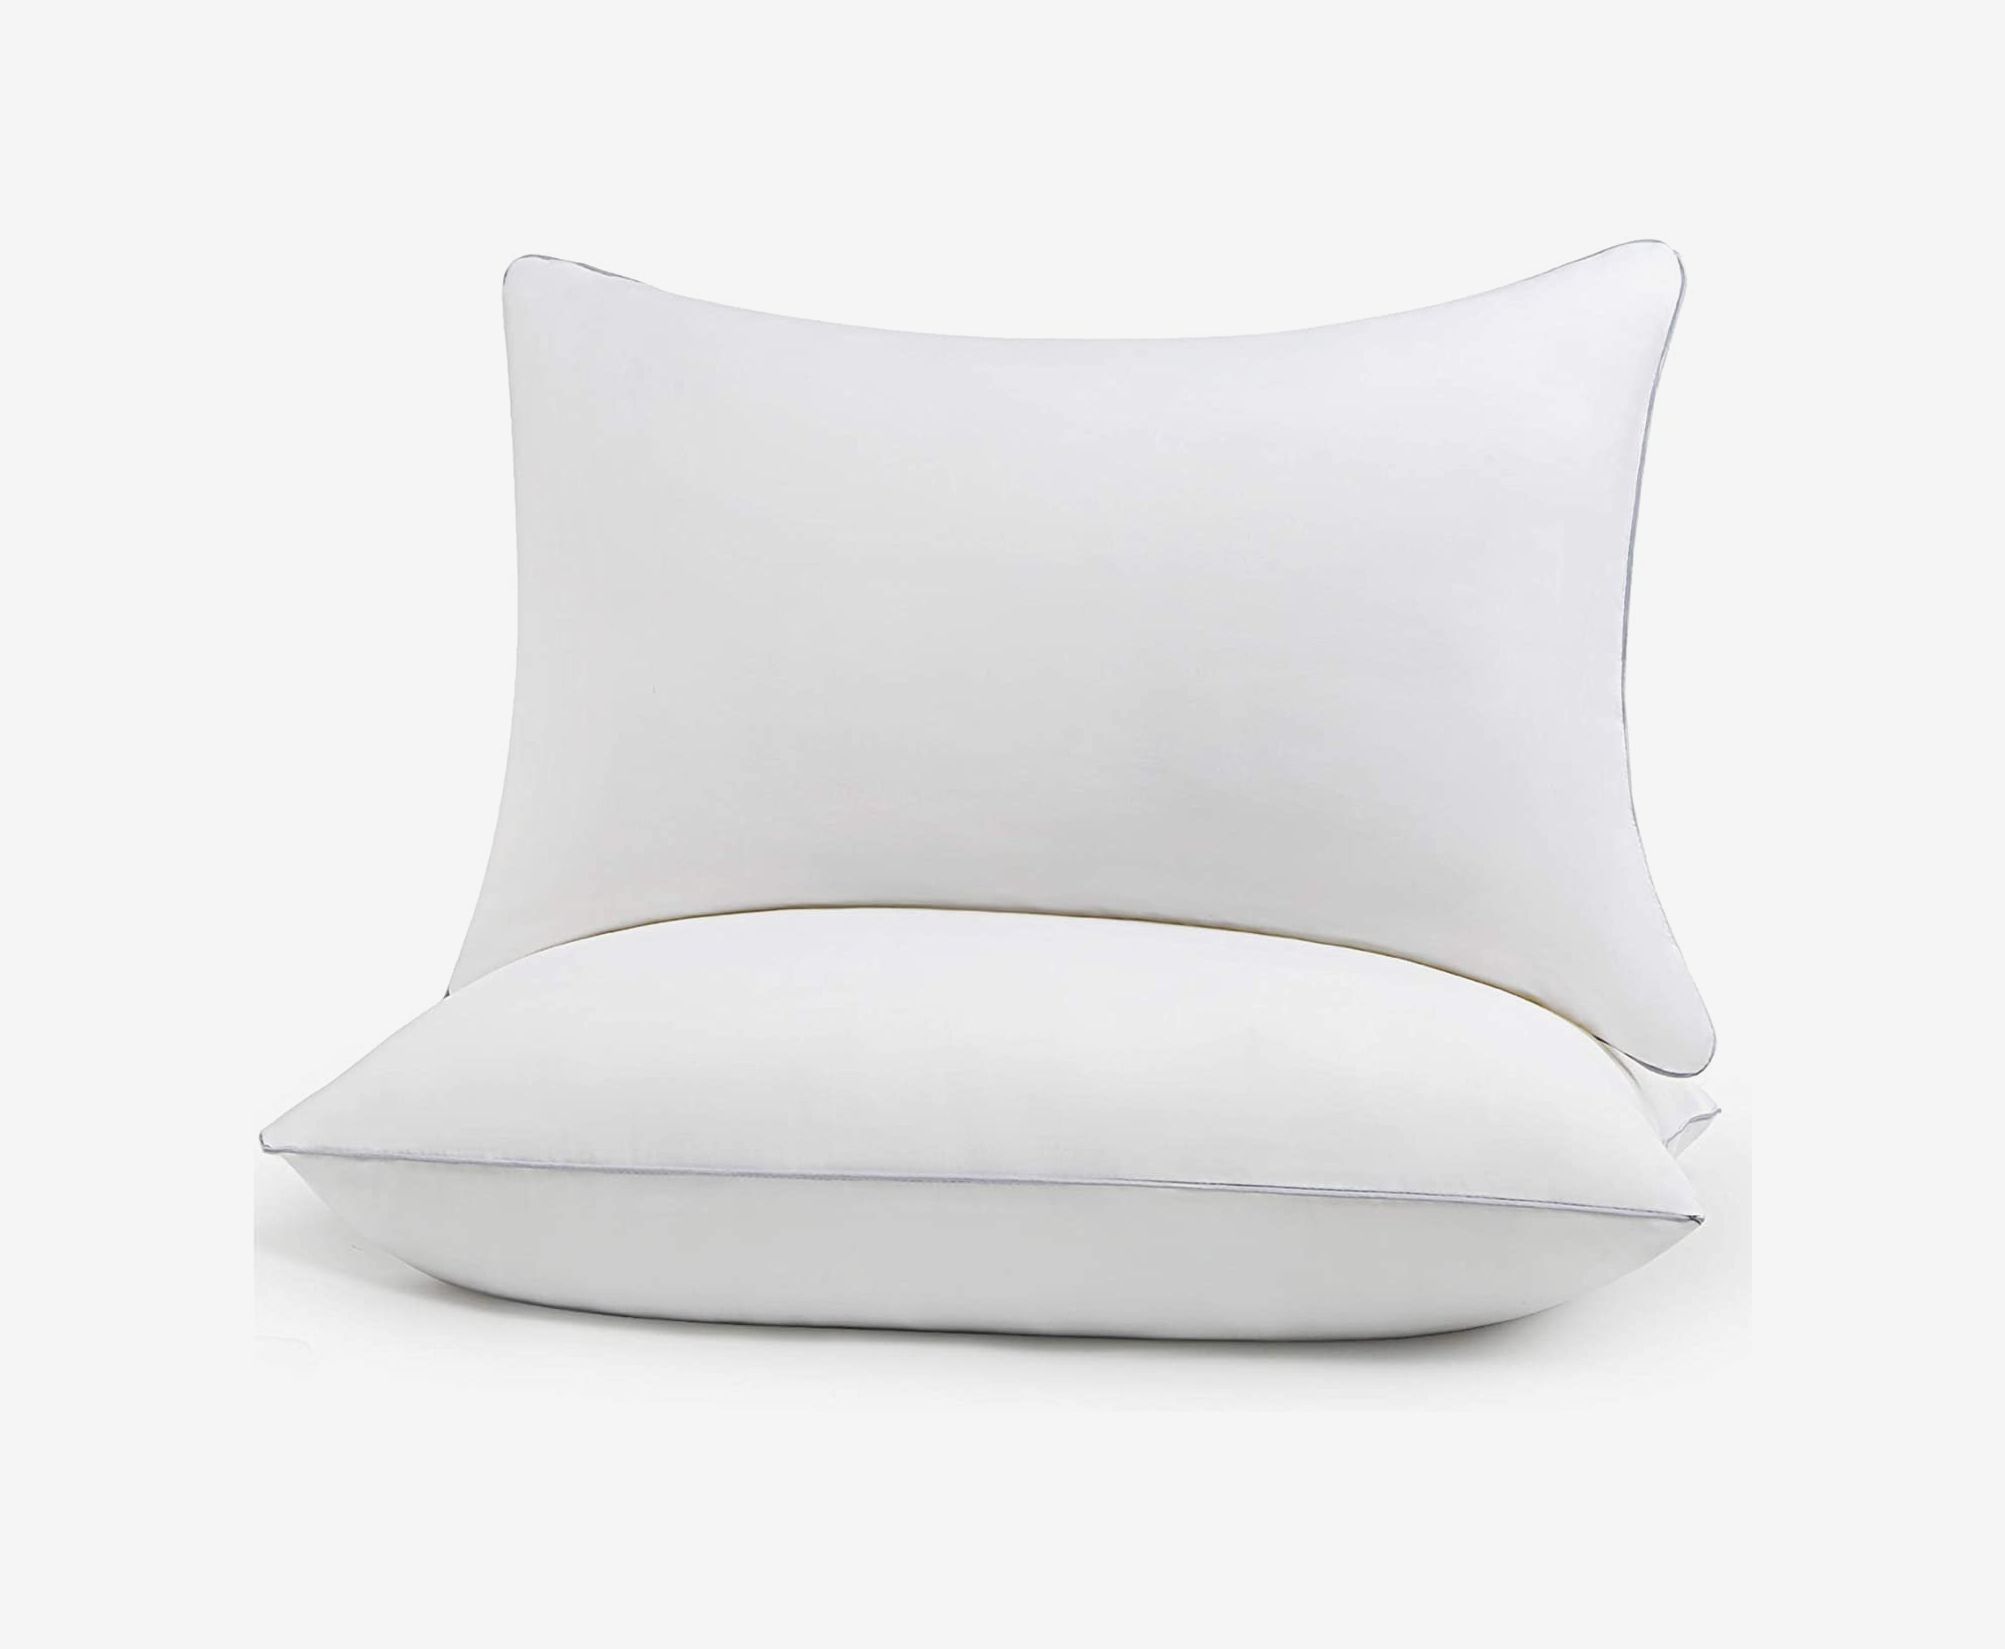 Super Firm Pillow Pillows Queen Size Extra Firm Bed Neck Head Support Sleeping 